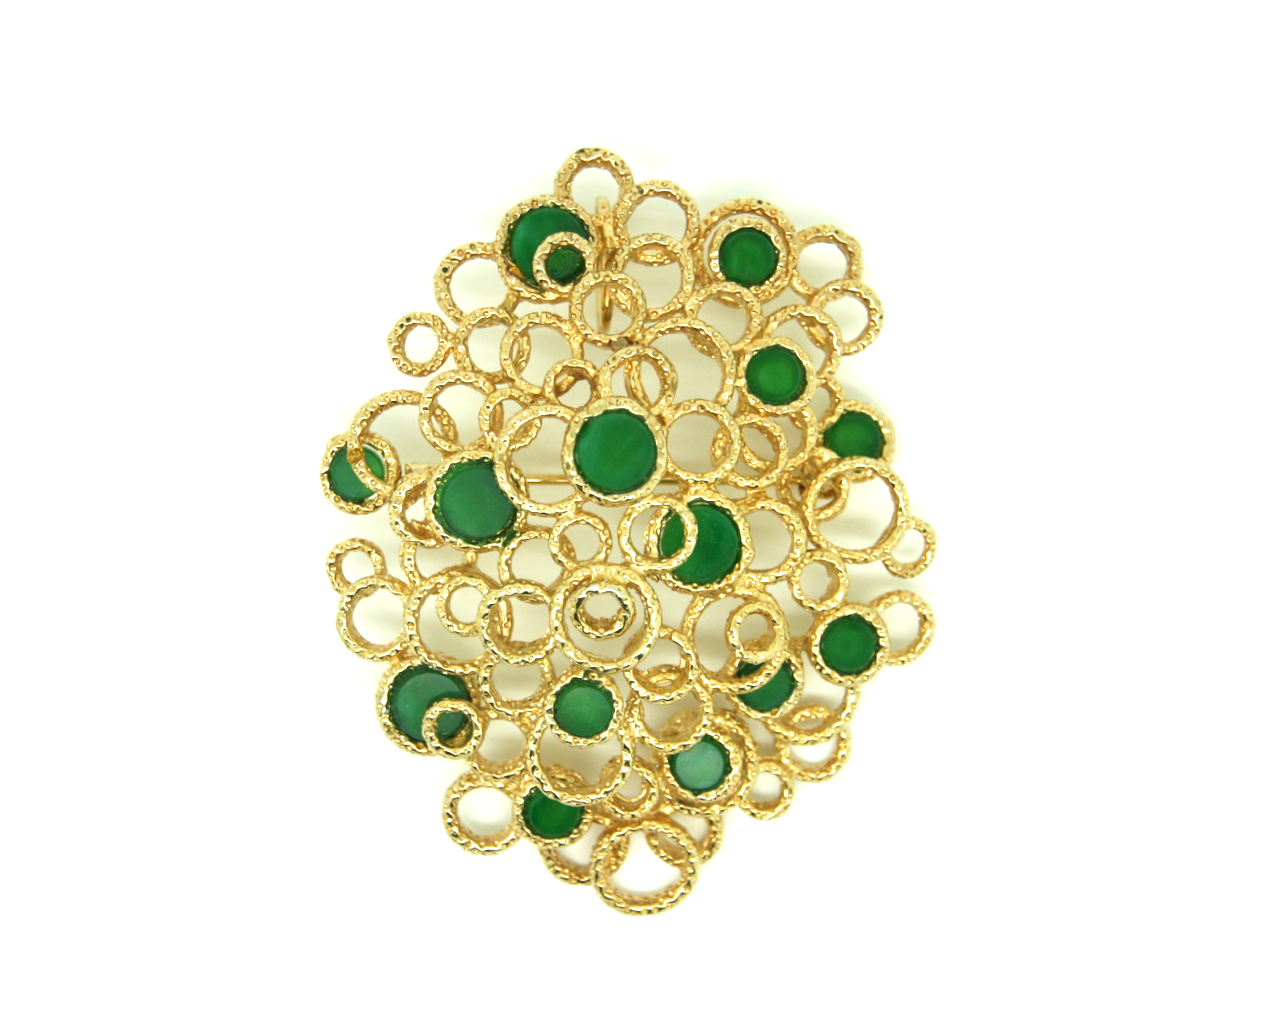 1960's PANETTA green circles brooch/pendant